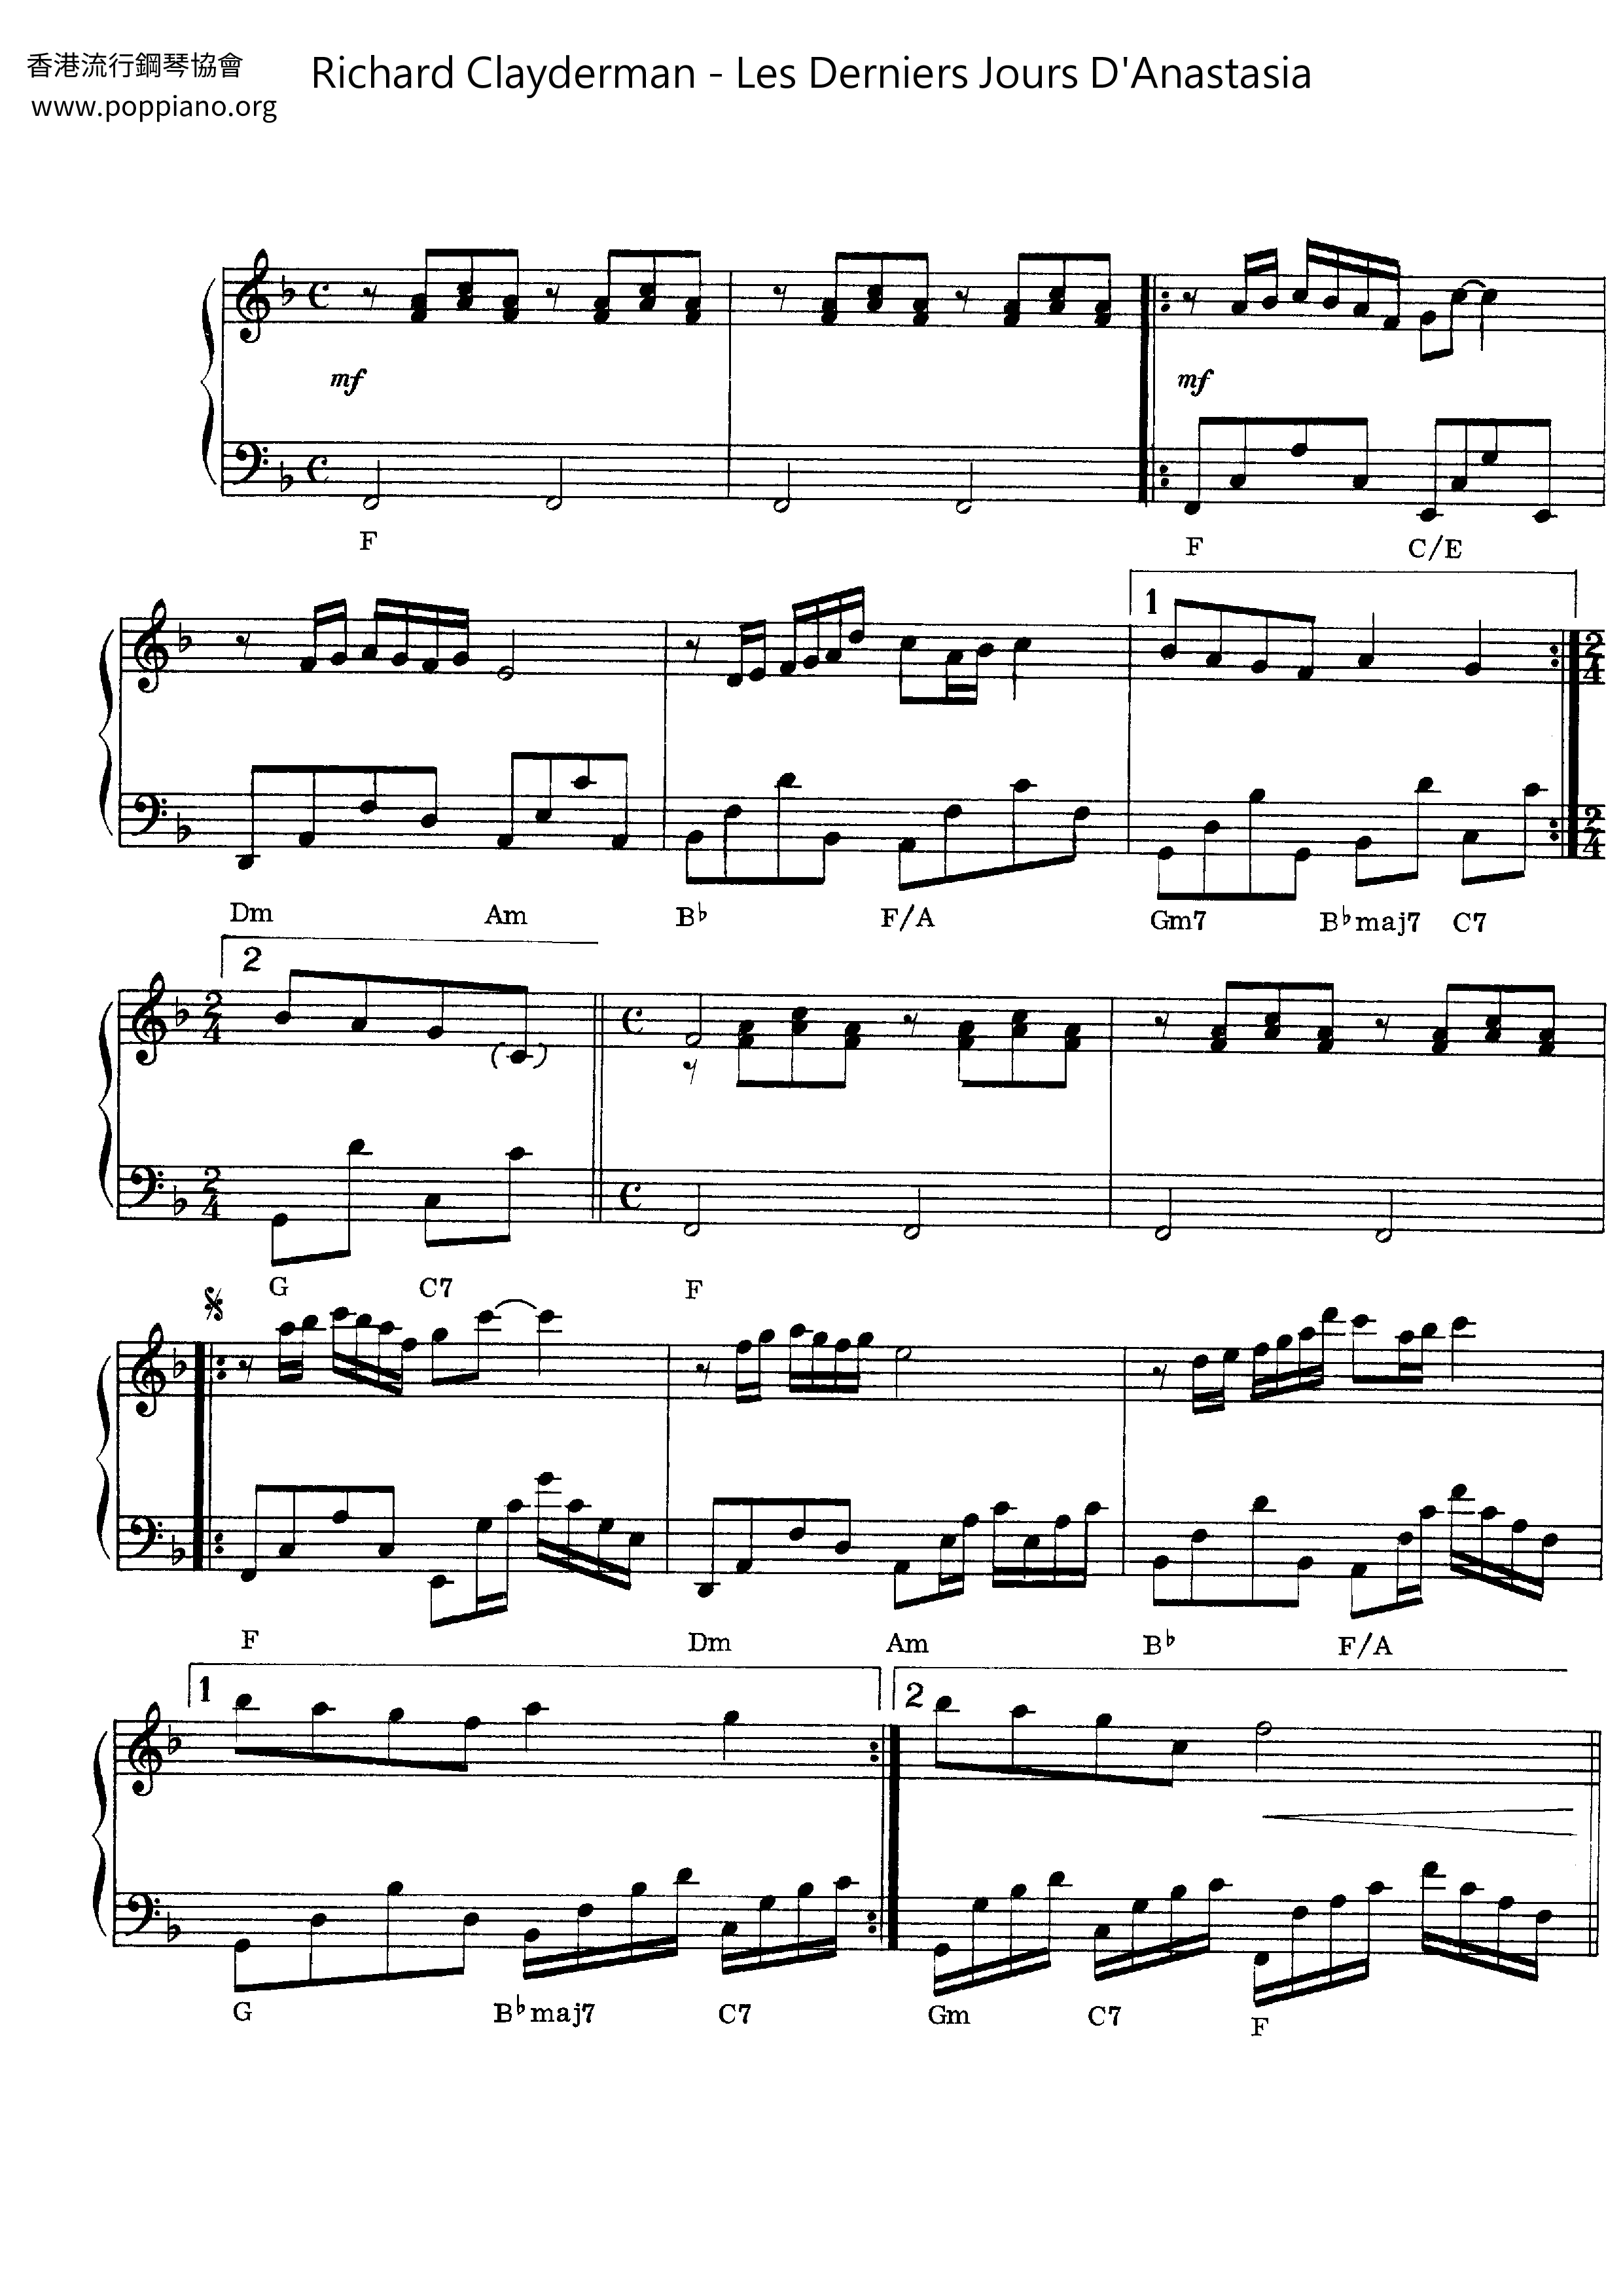 Les Derniers Jours D'Anastasiaピアノ譜